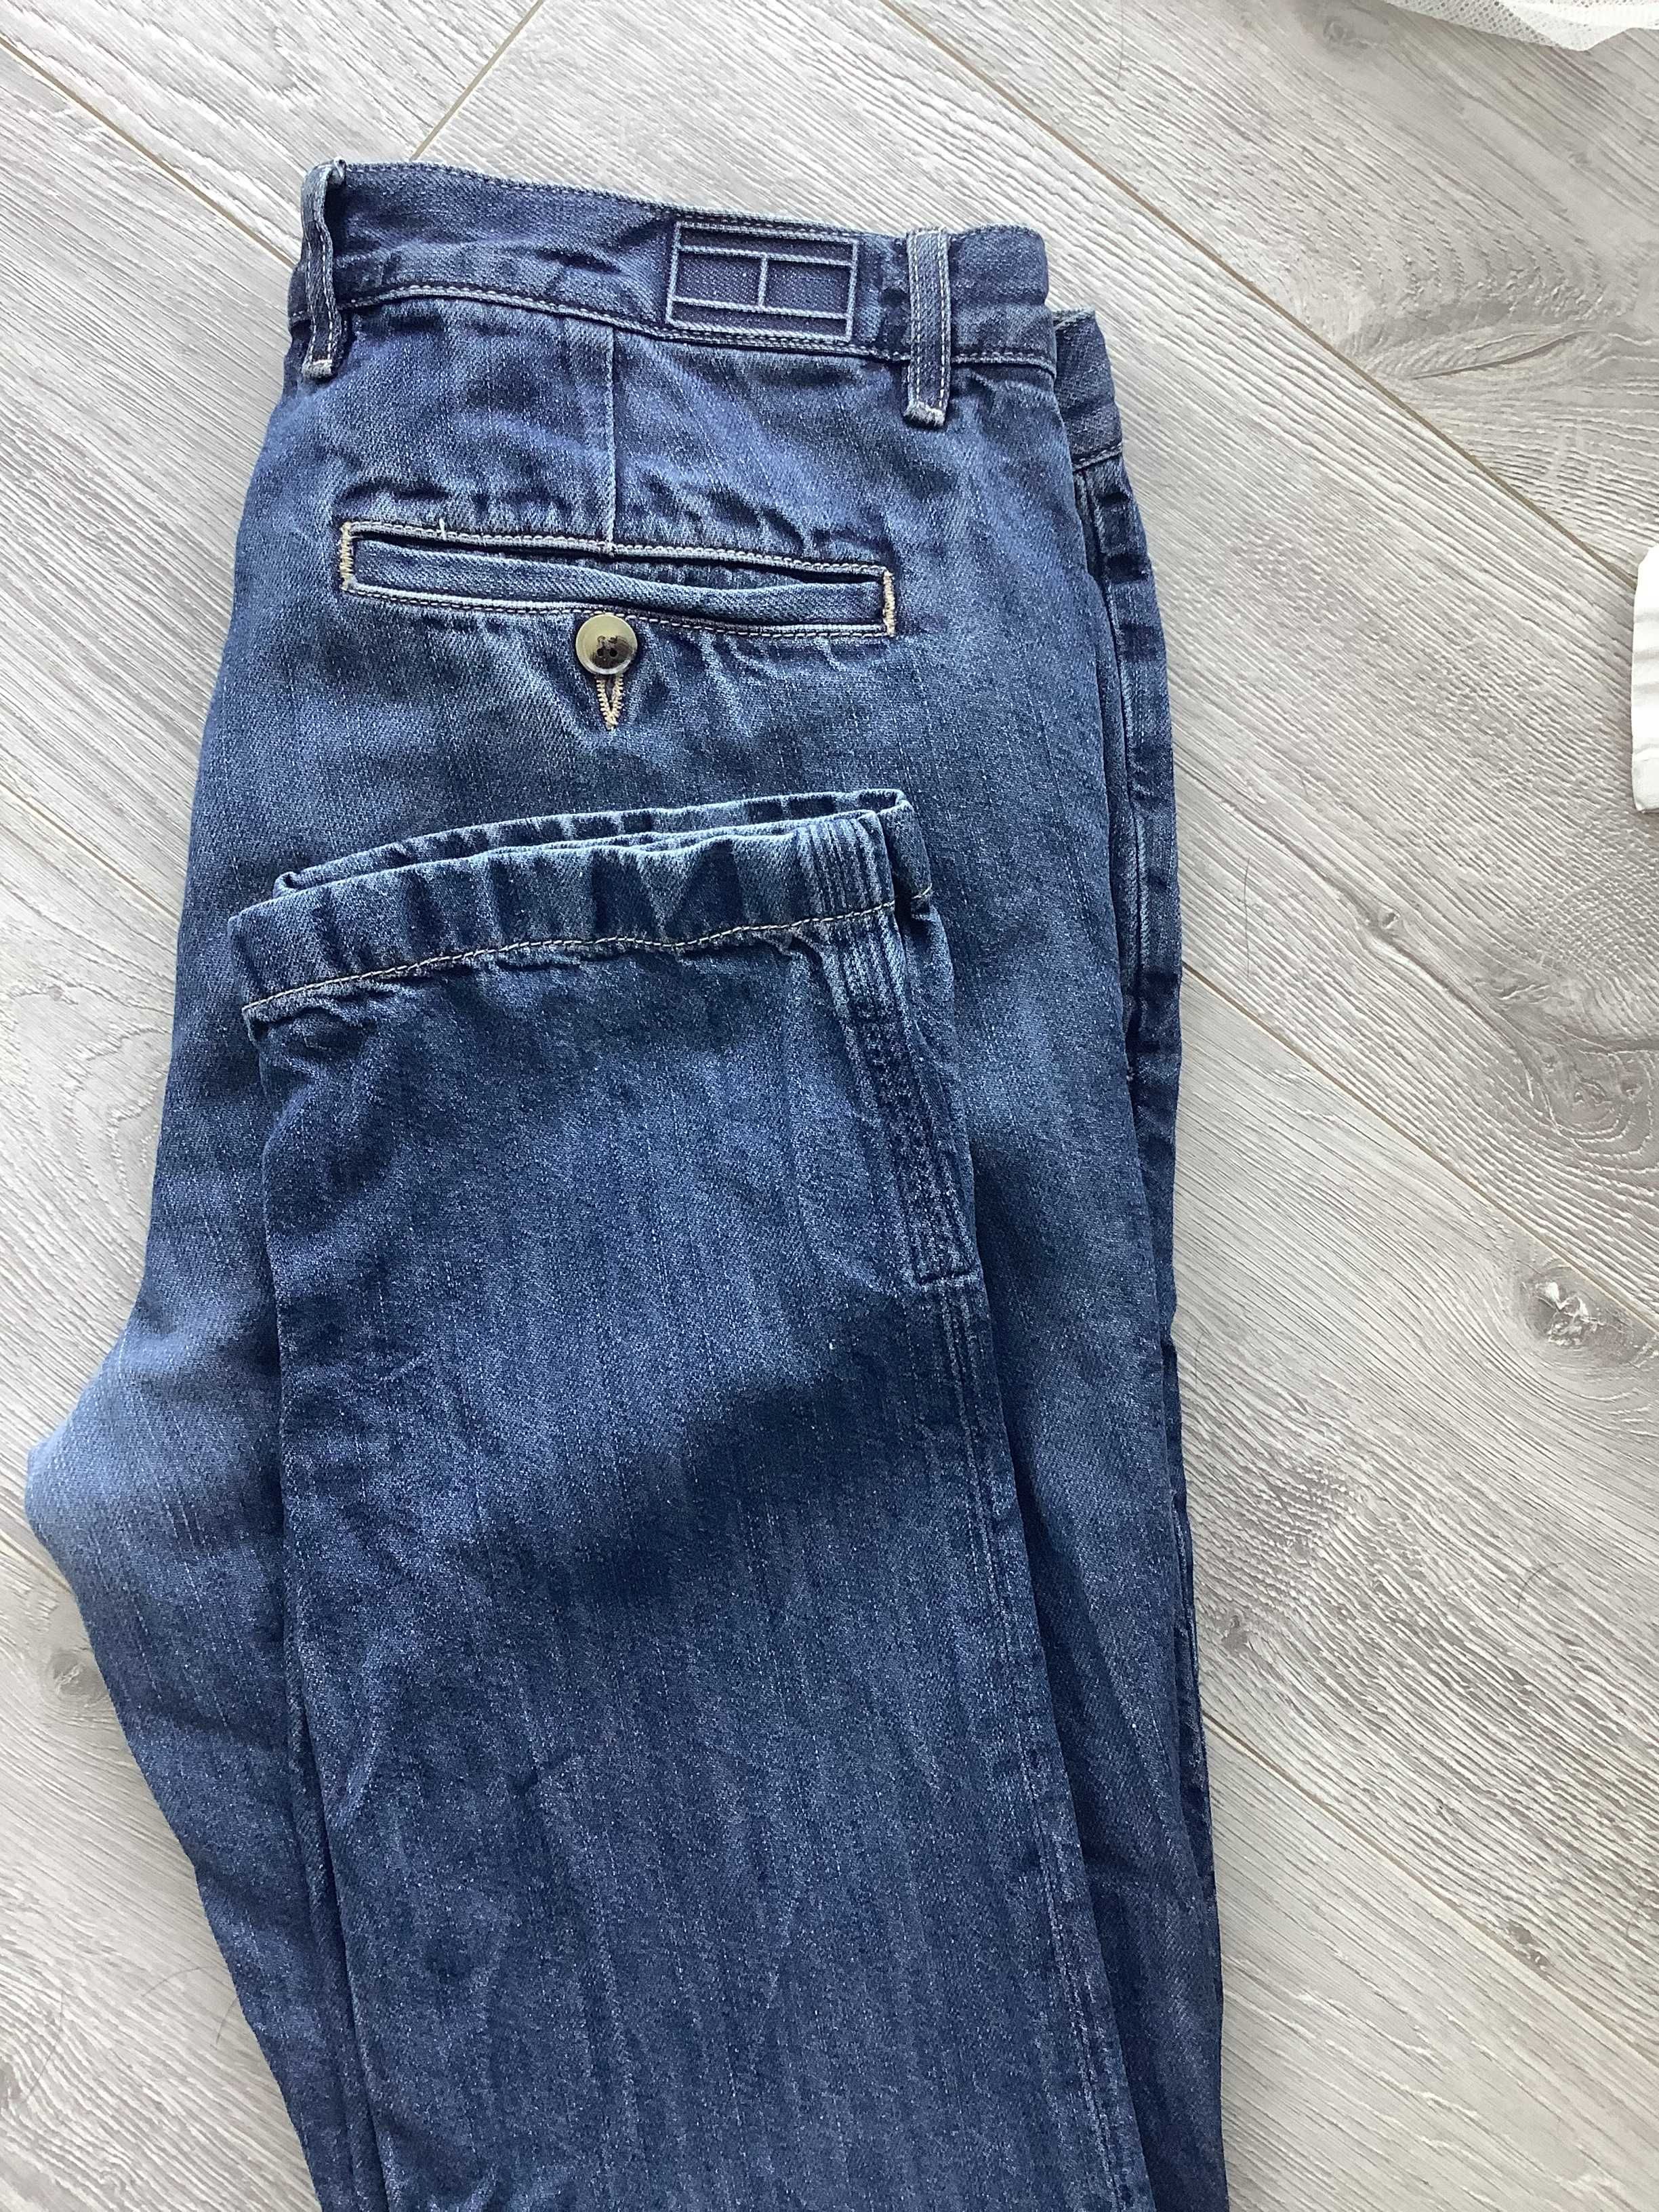 Tommy Hifiger 36/34 jeans + 3% strecz